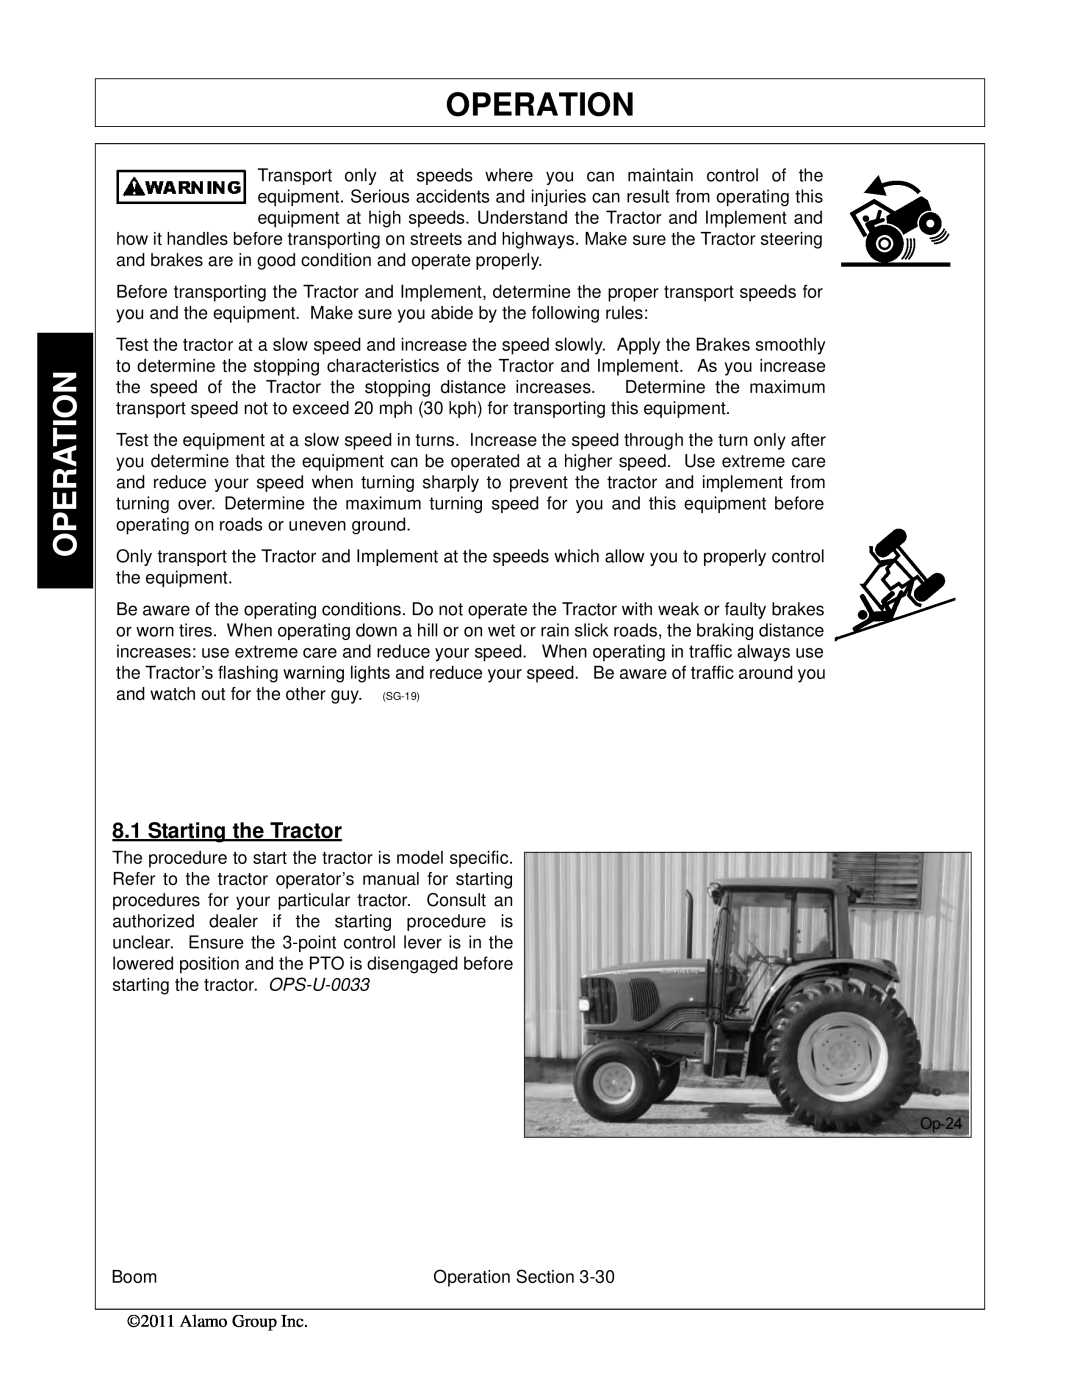 Tiger Products Co., Ltd 5093E, 5083E, 5101E manual Operation, Starting the Tractor 